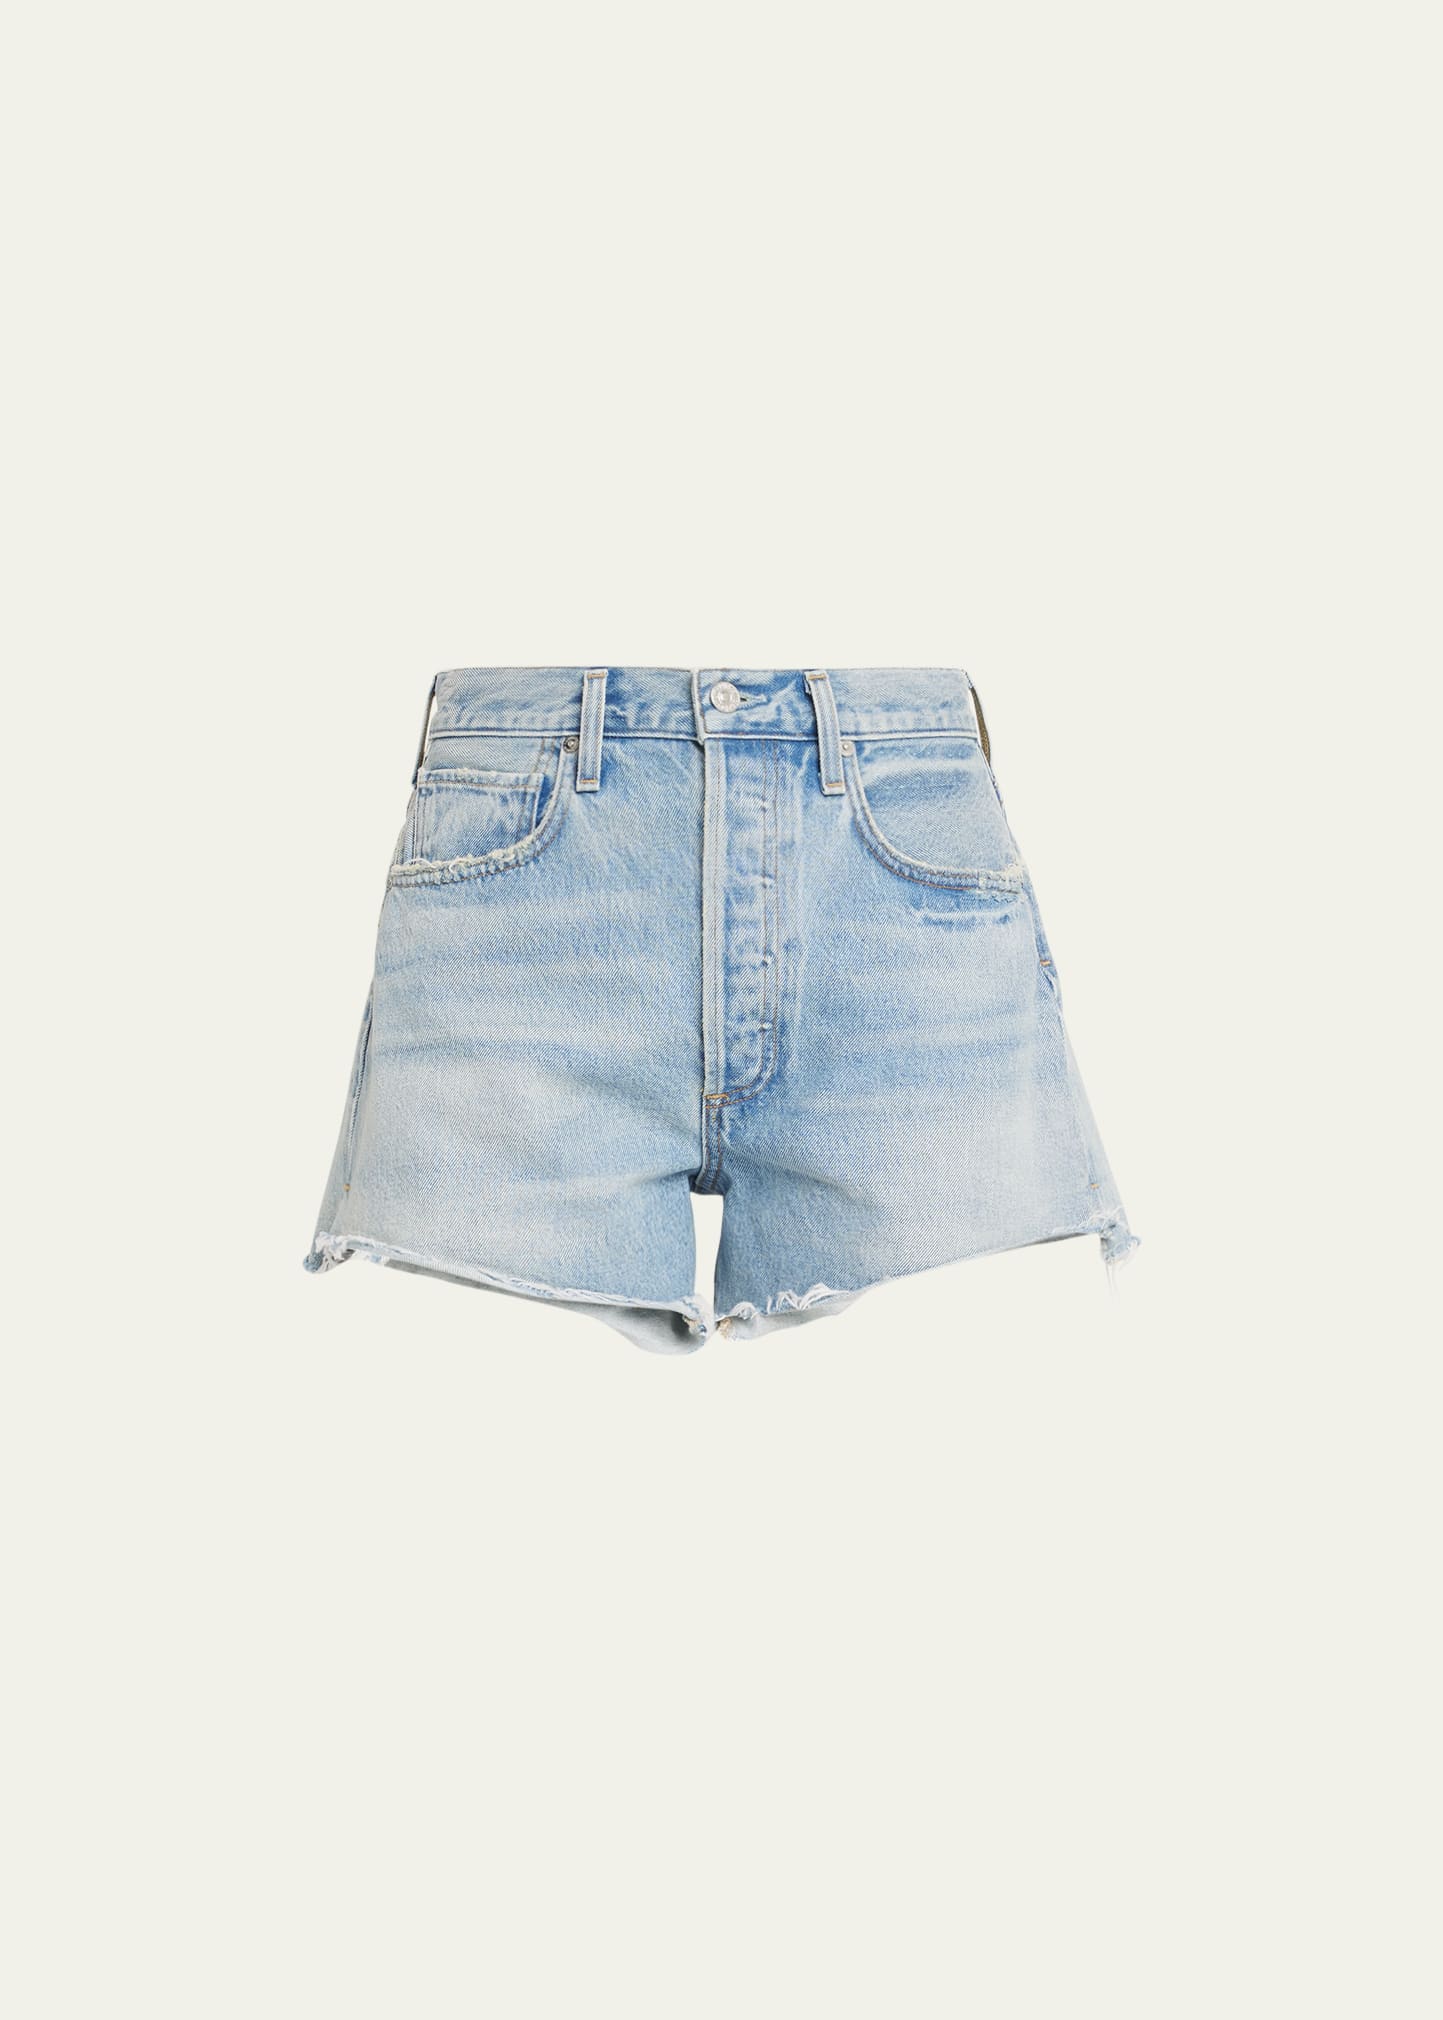 Marlow Vintage Denim Shorts